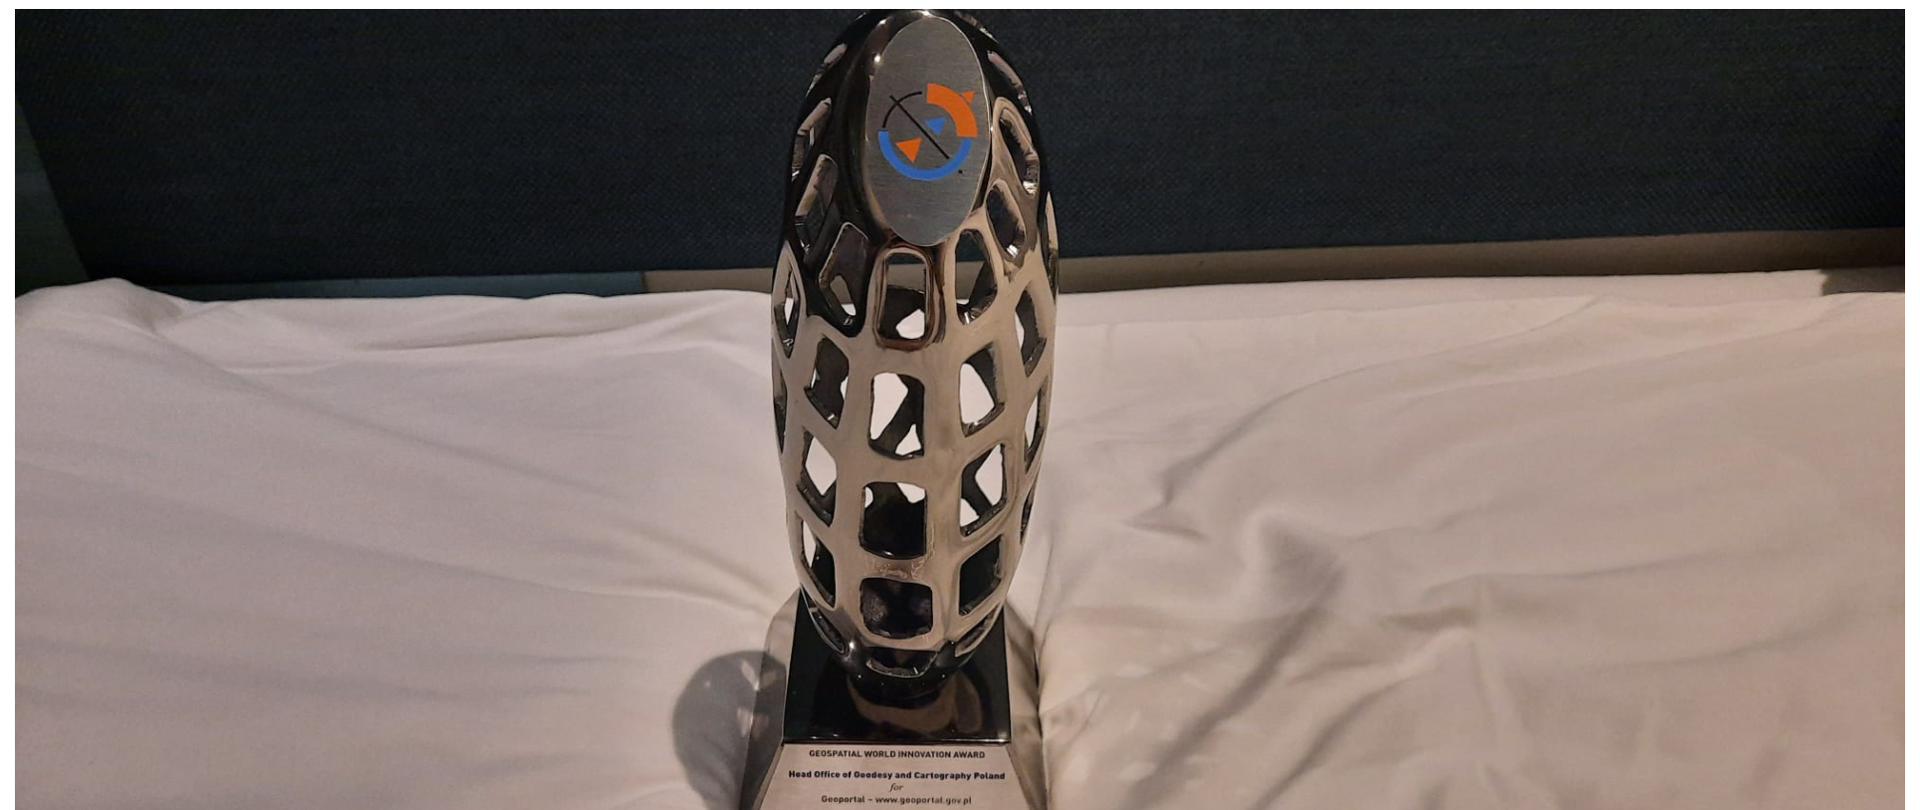 "Geospatial World Innovation Award" 